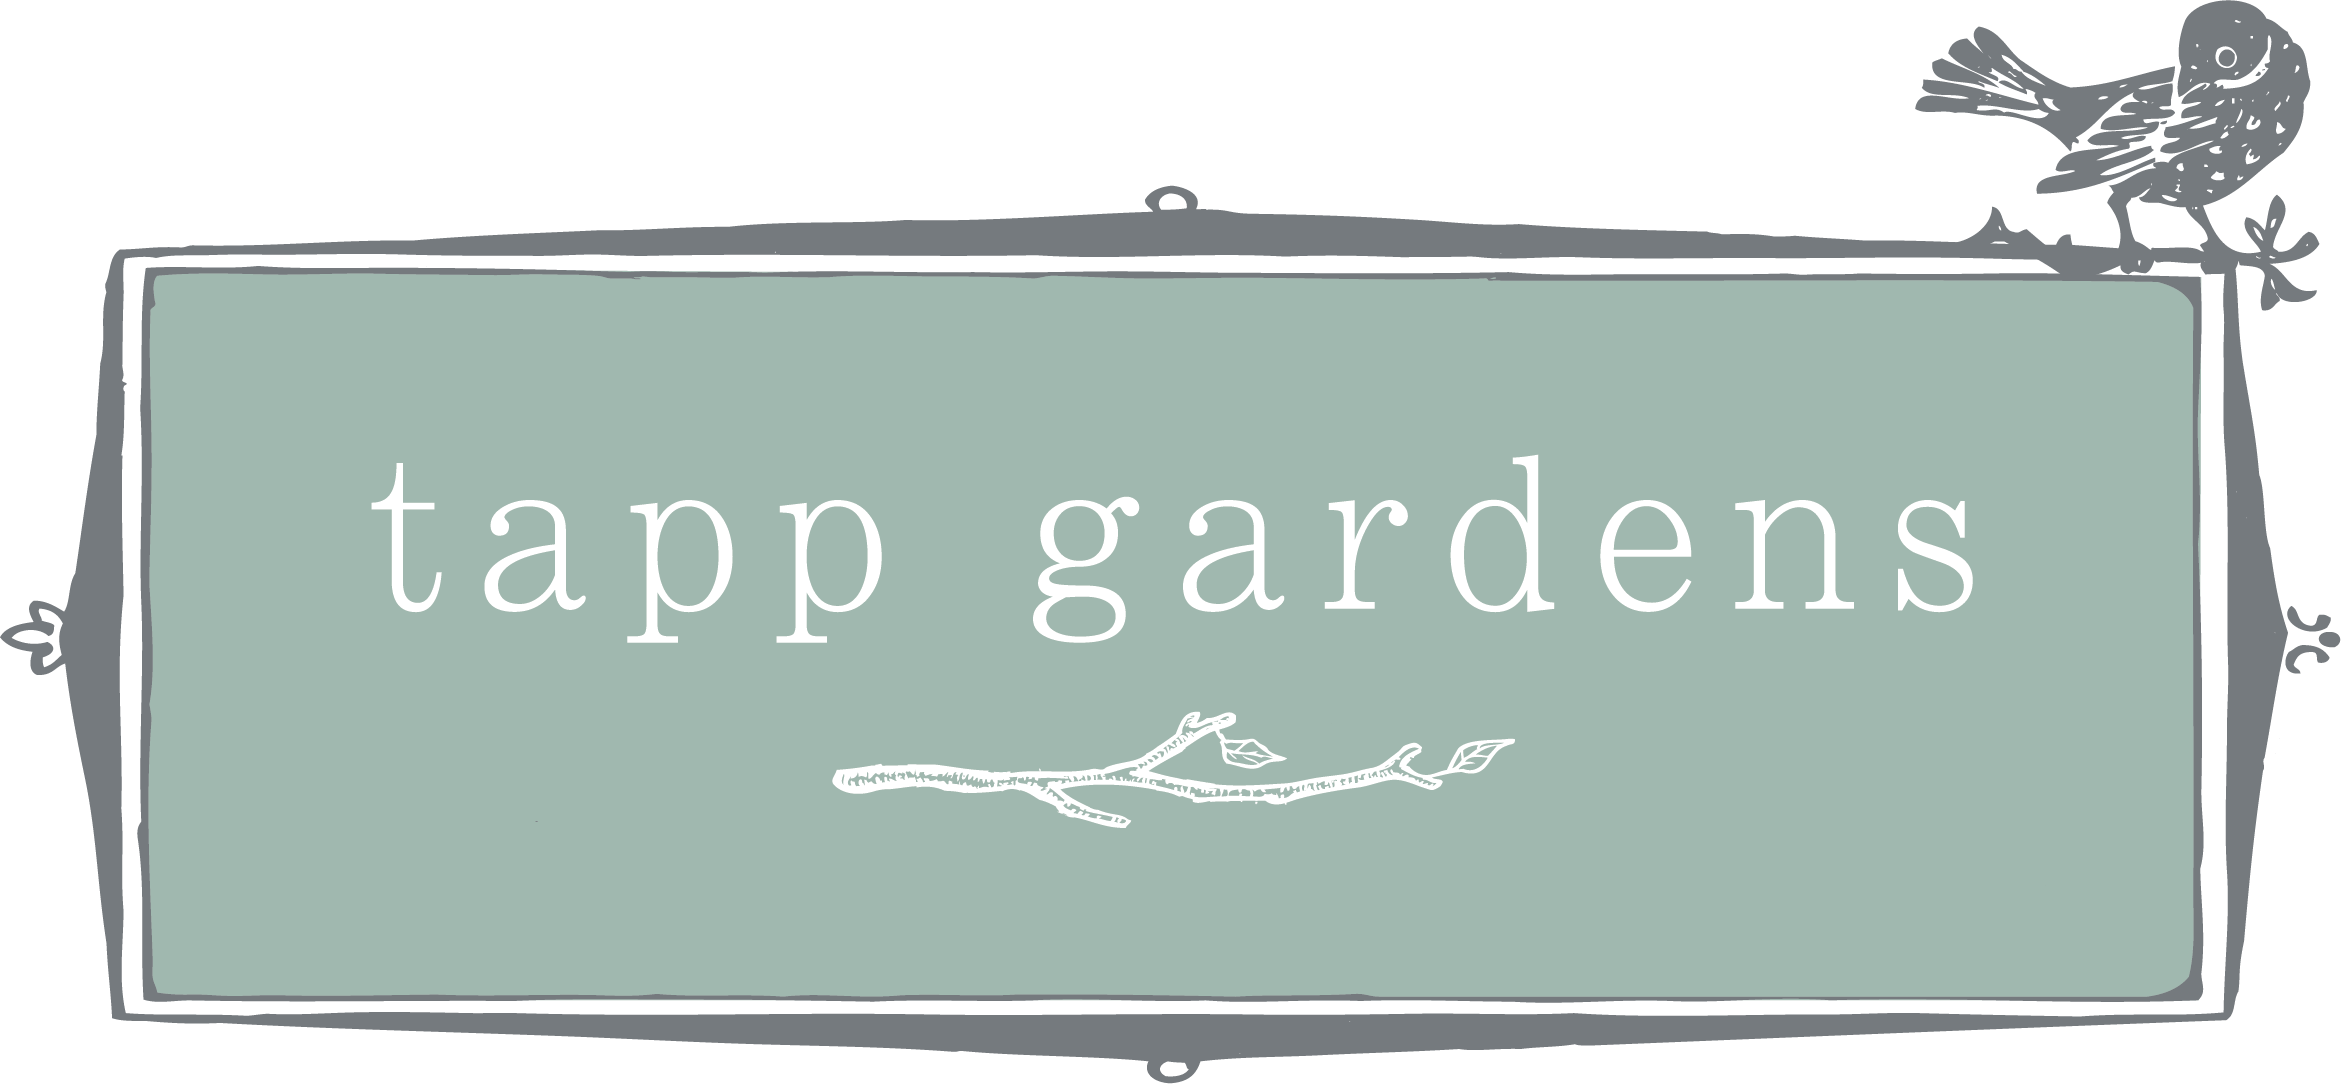 Tapp gardens